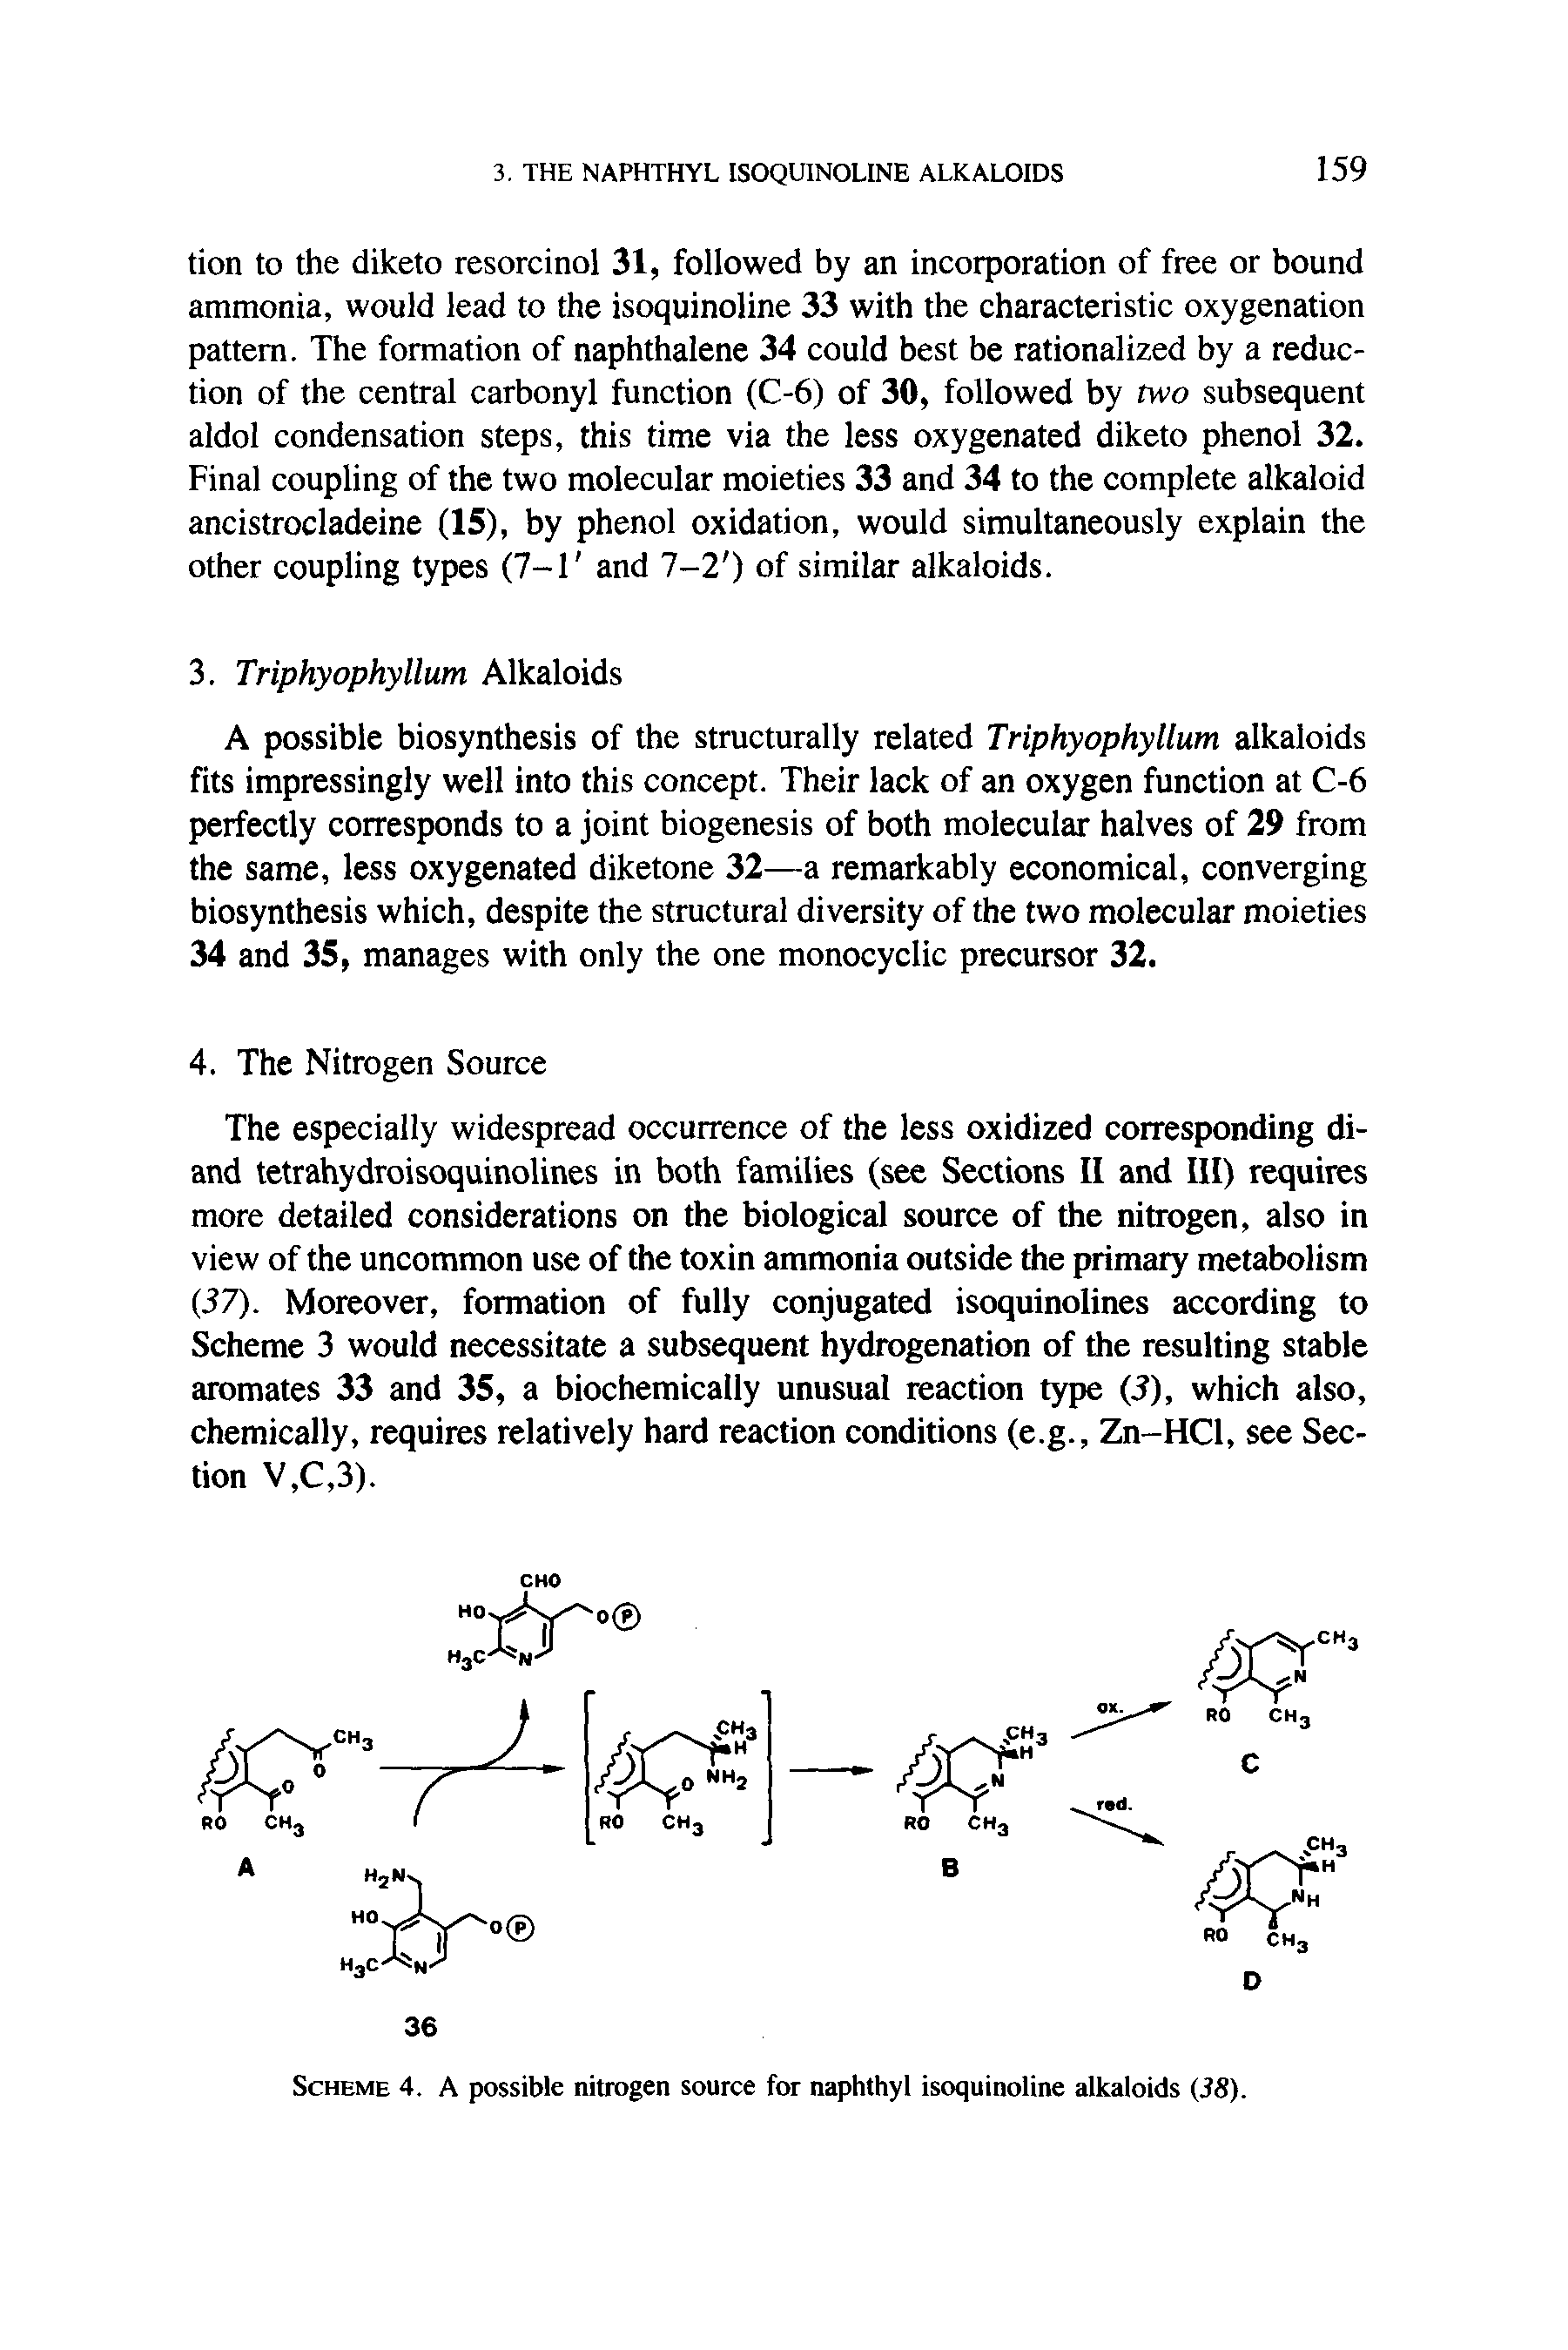 Scheme 4. A possible nitrogen source for naphthyl isoquinoline alkaloids 38).